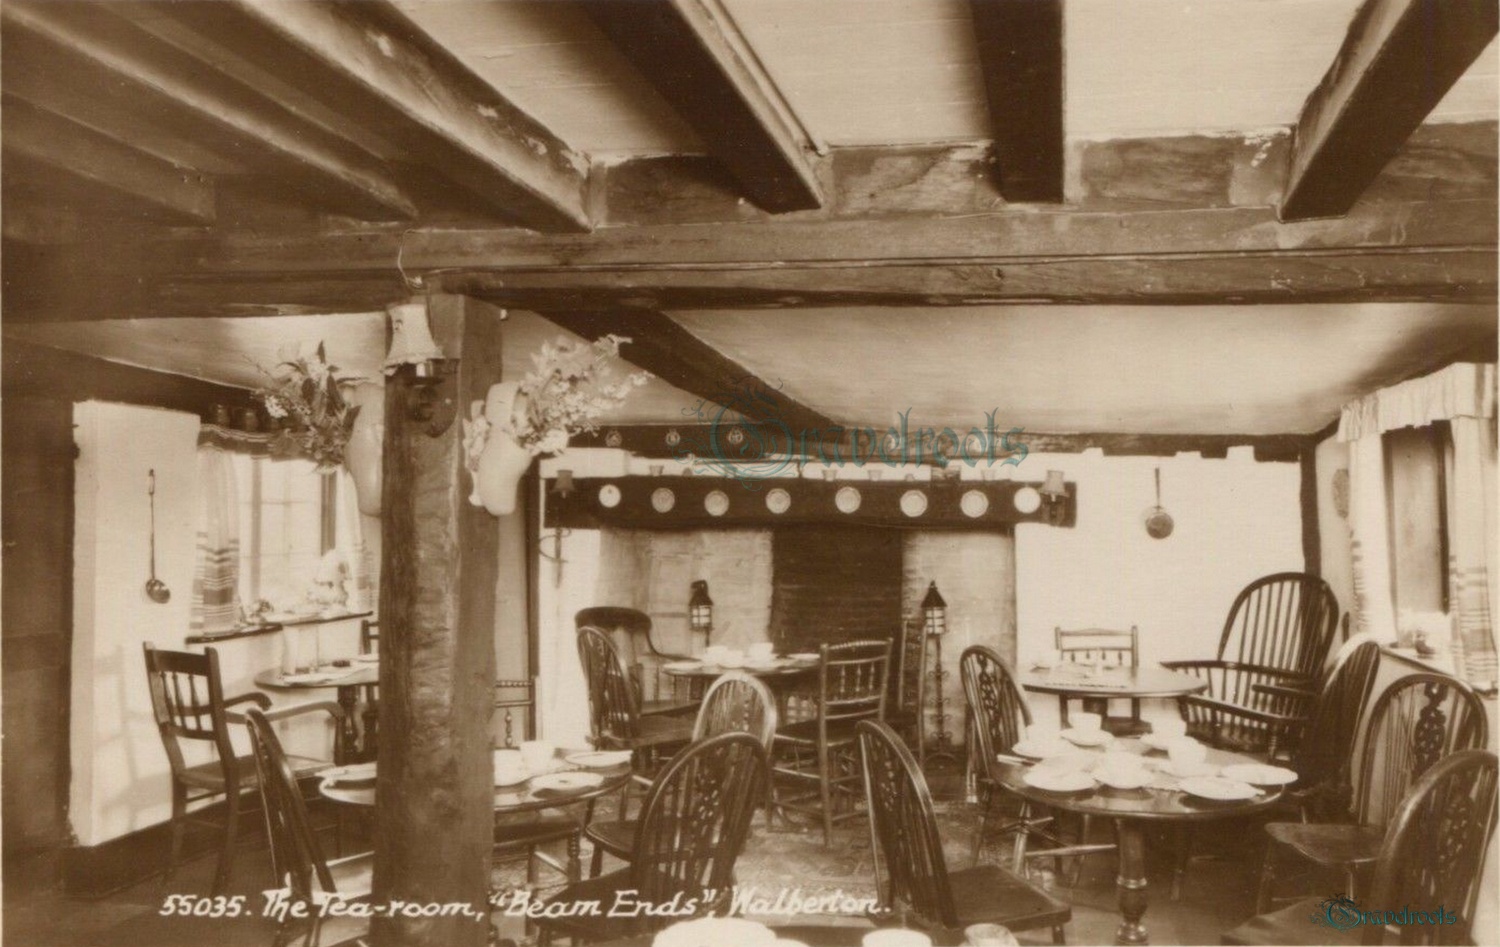 Beam Ends, Tea Rooms, Walberton - click image to return